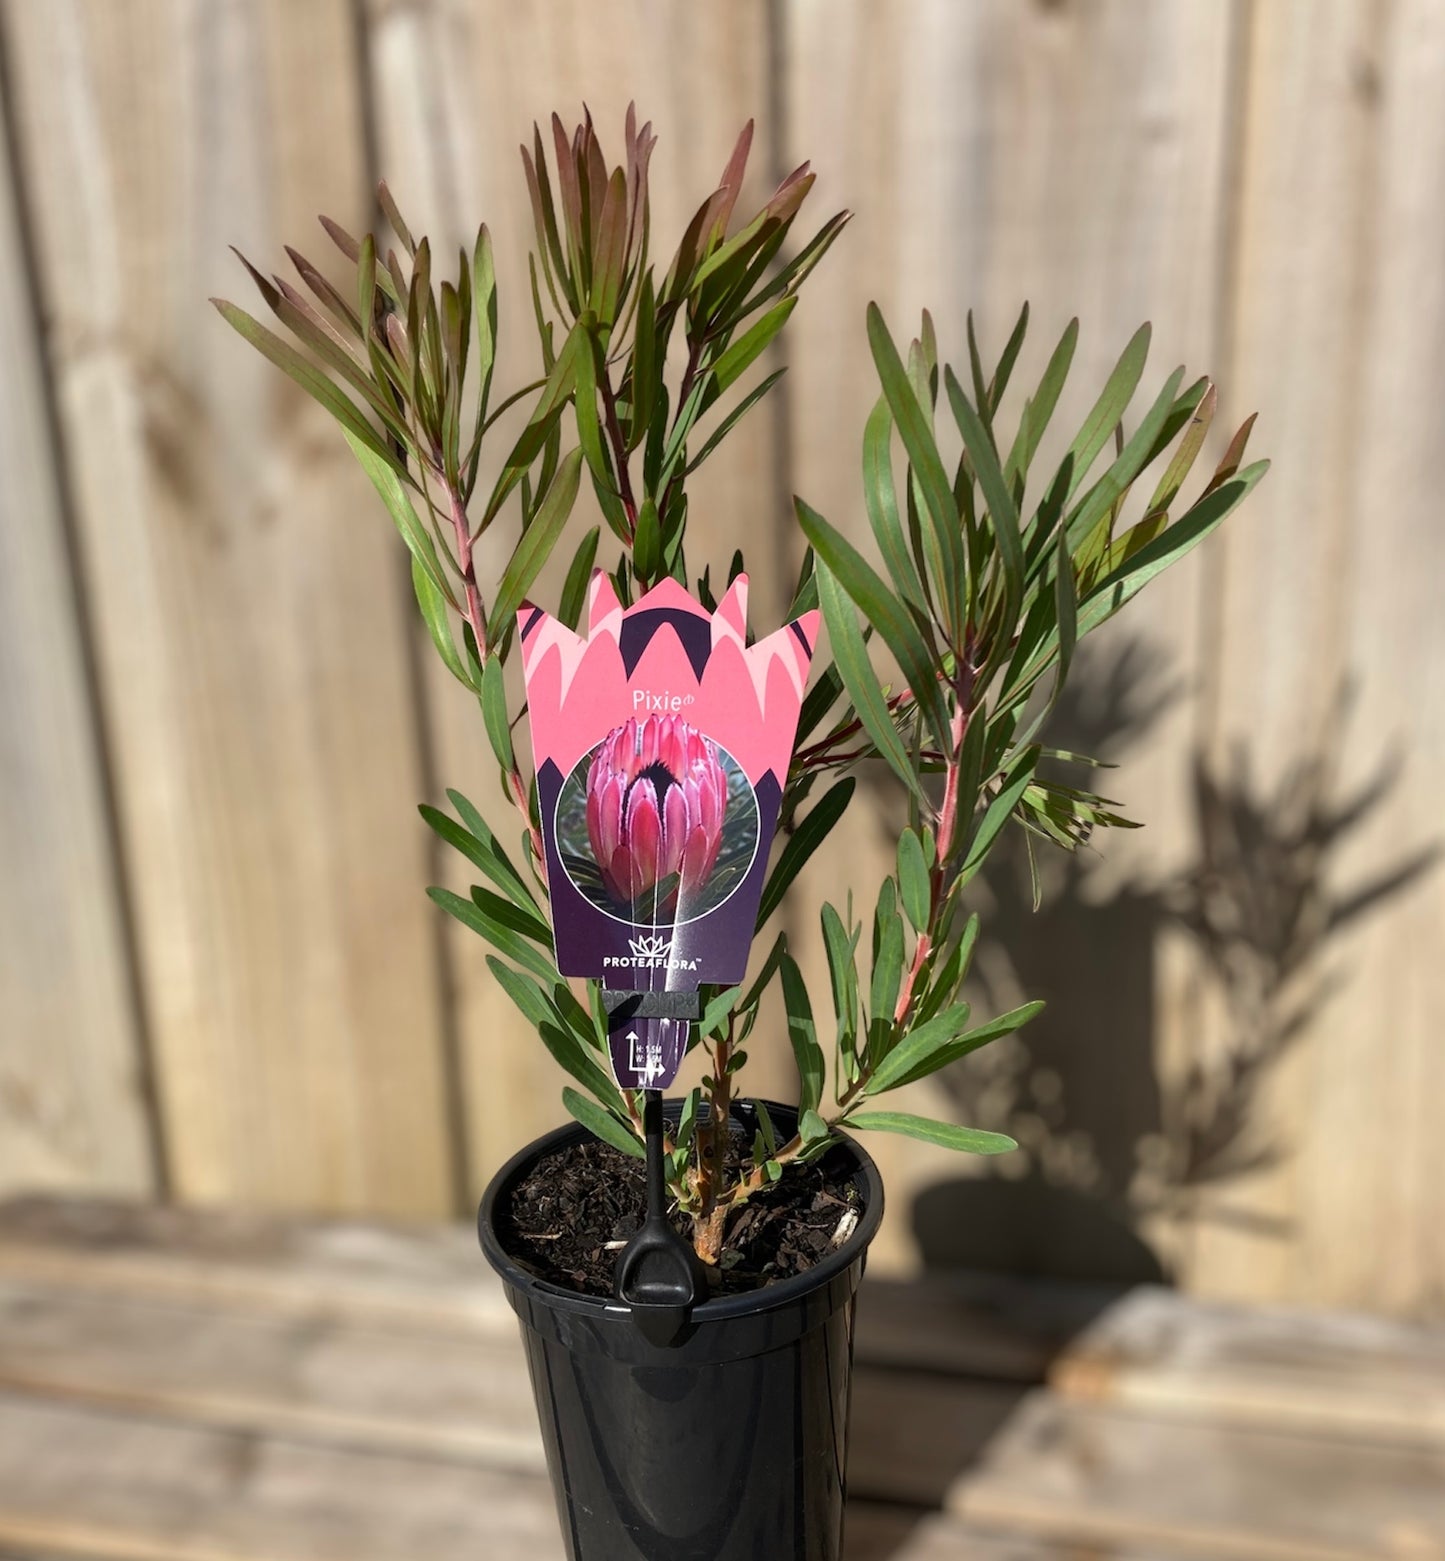 Protea pudens x longifolia 'Pixie' PBR 14cm